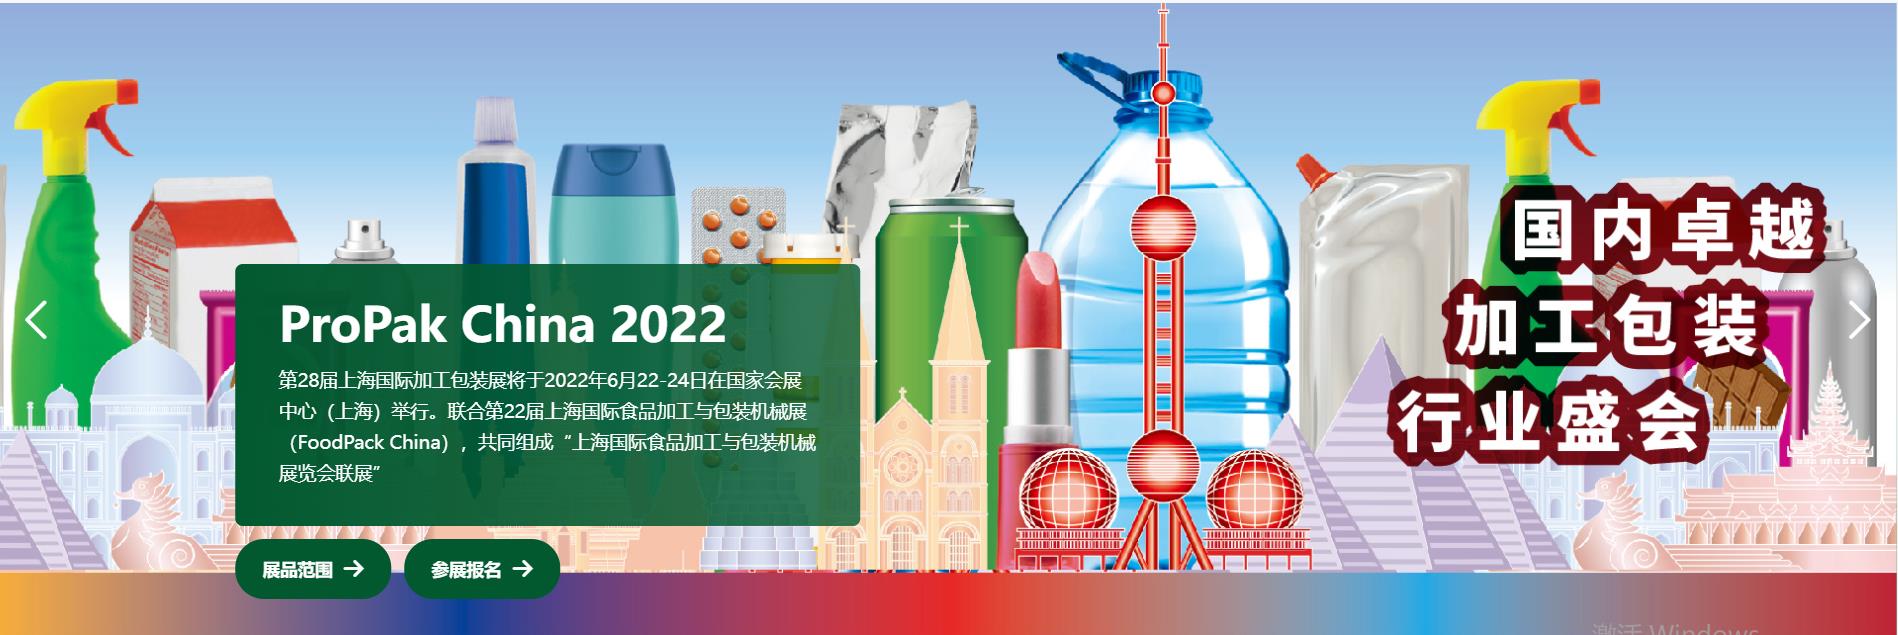 propak 深圳食品展会 上海2022食品加工包装机械博览会